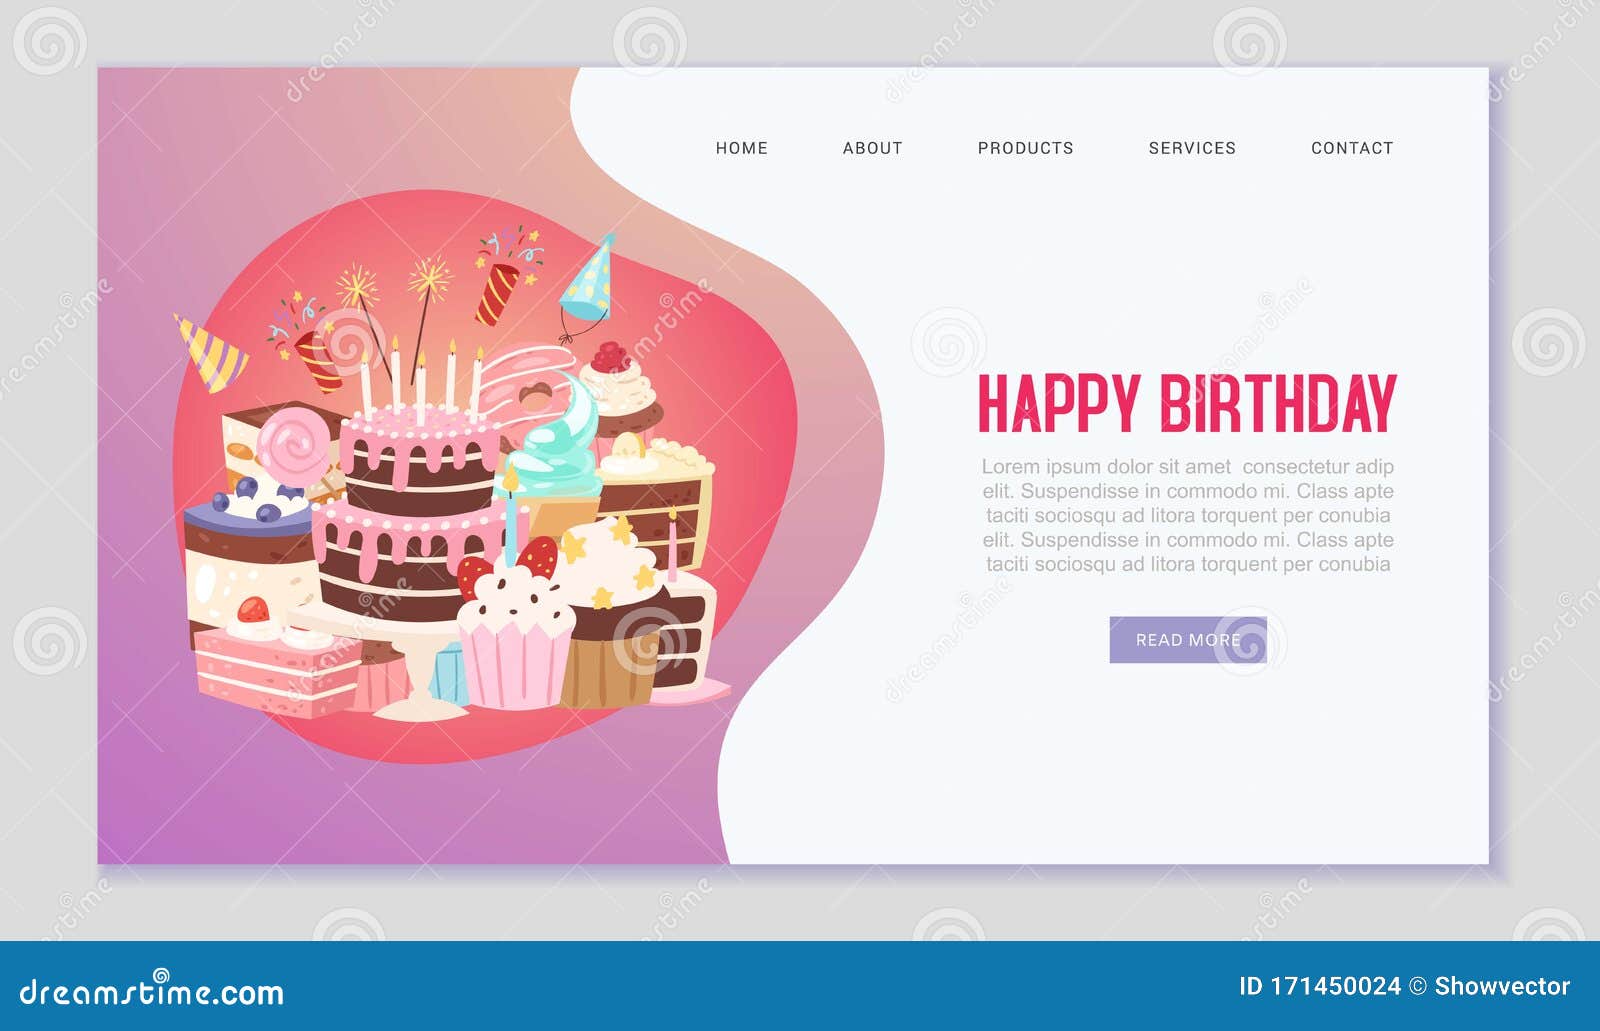 Happy Birthday Sweets Festive Web Template Vector Illustration. Happy